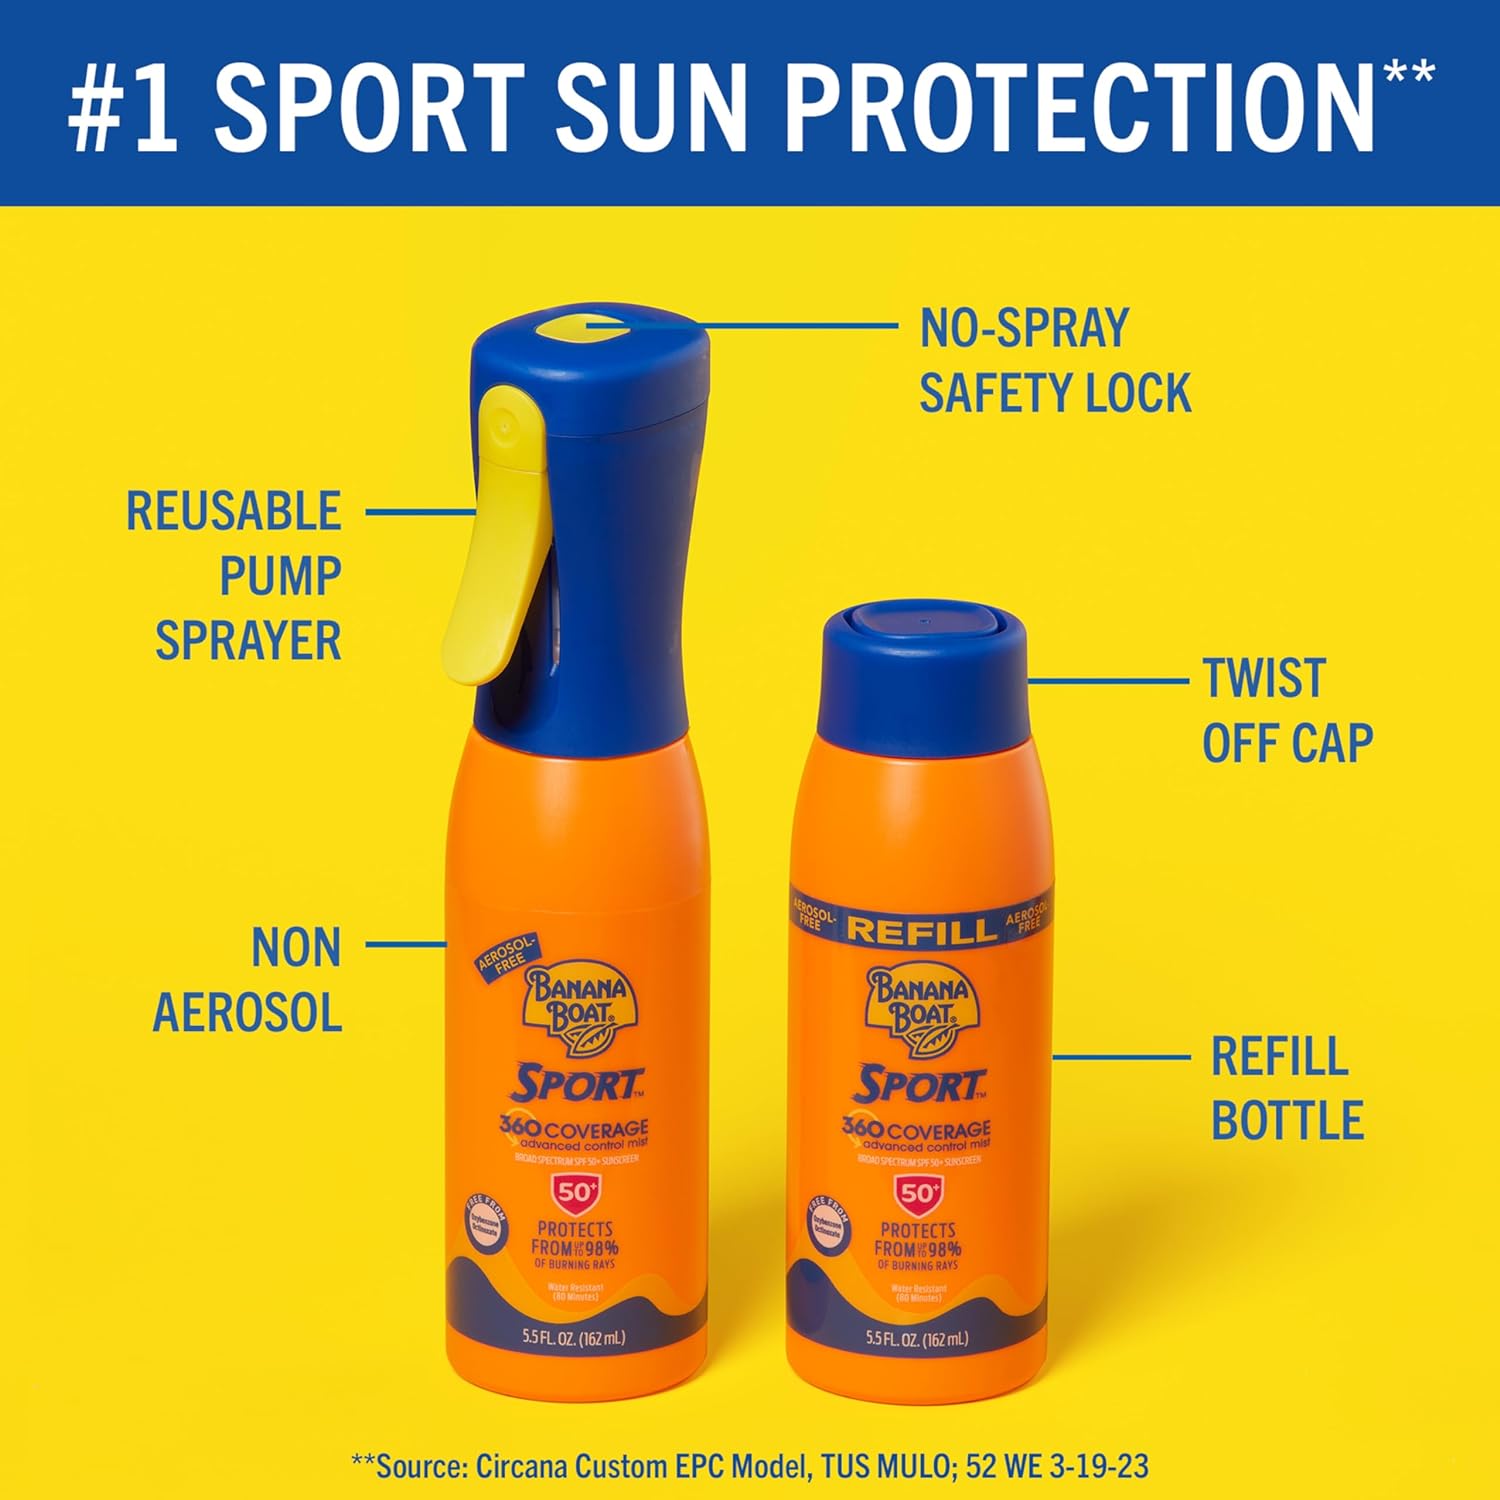 Banana Boat Sport 360 Coverage Sunscreen Mist Refill SPF 50+ | Spray Sunscreen Refill, Non-Aerosol Sunscreen Spray Refill, Sunscreen Spray SPF 50, SPF Spray, Oxybenzone Free Sunscreen, 5.5oz : Beauty & Personal Care